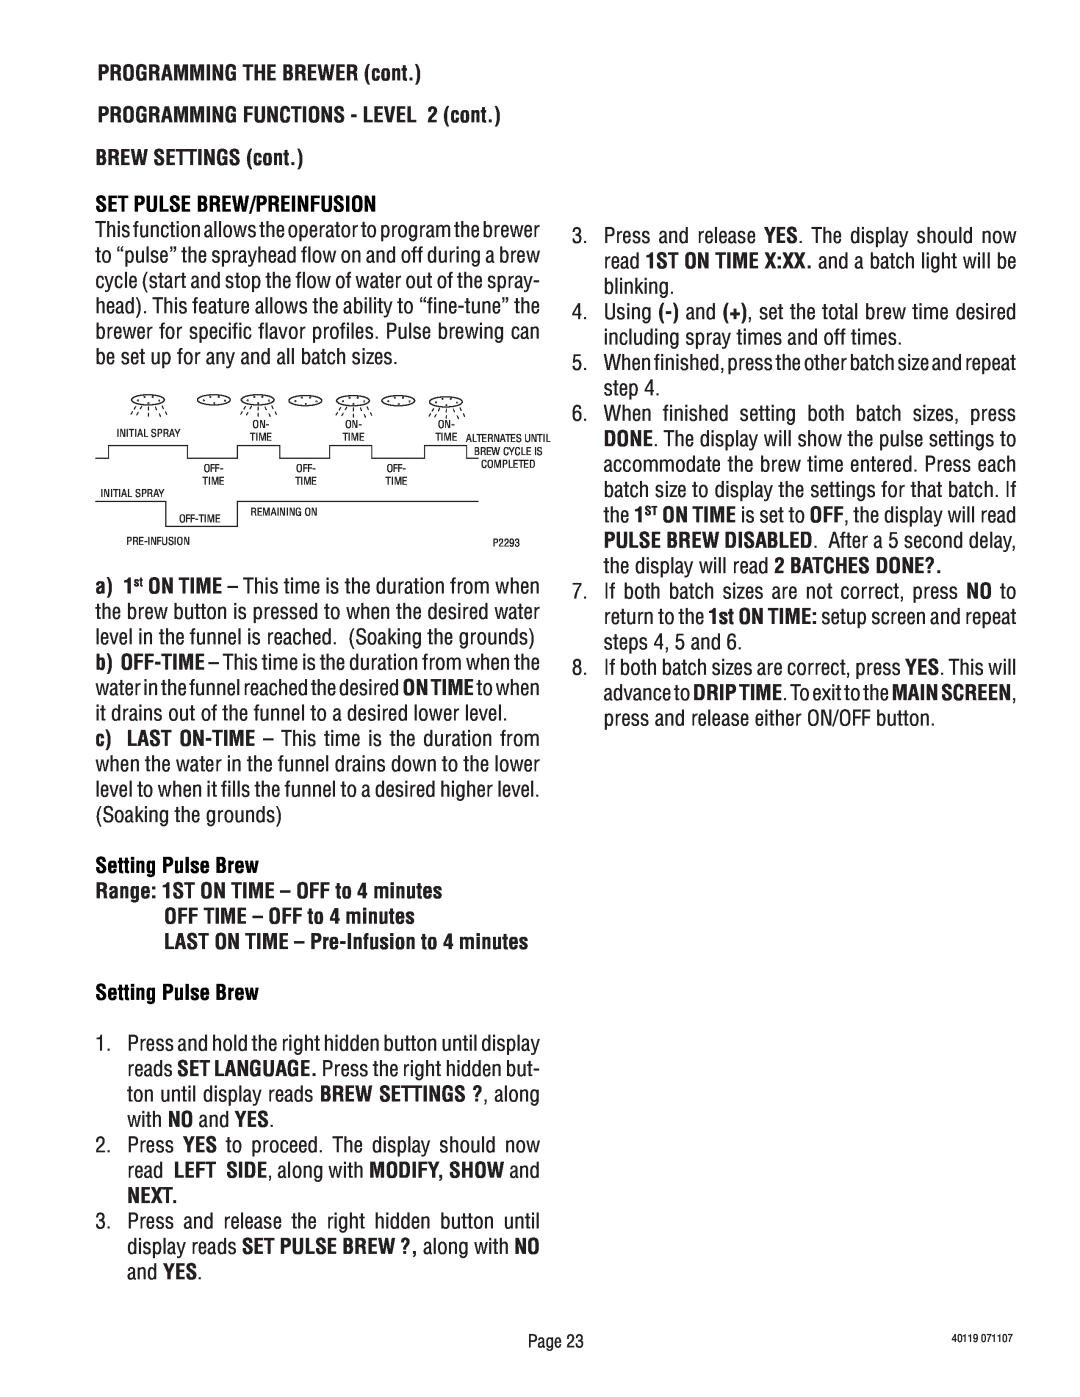 Bunn TITAN DUAL manual BREW SETTINGS cont SET PULSE BREW/PREINFUSION, Setting Pulse Brew, Next 